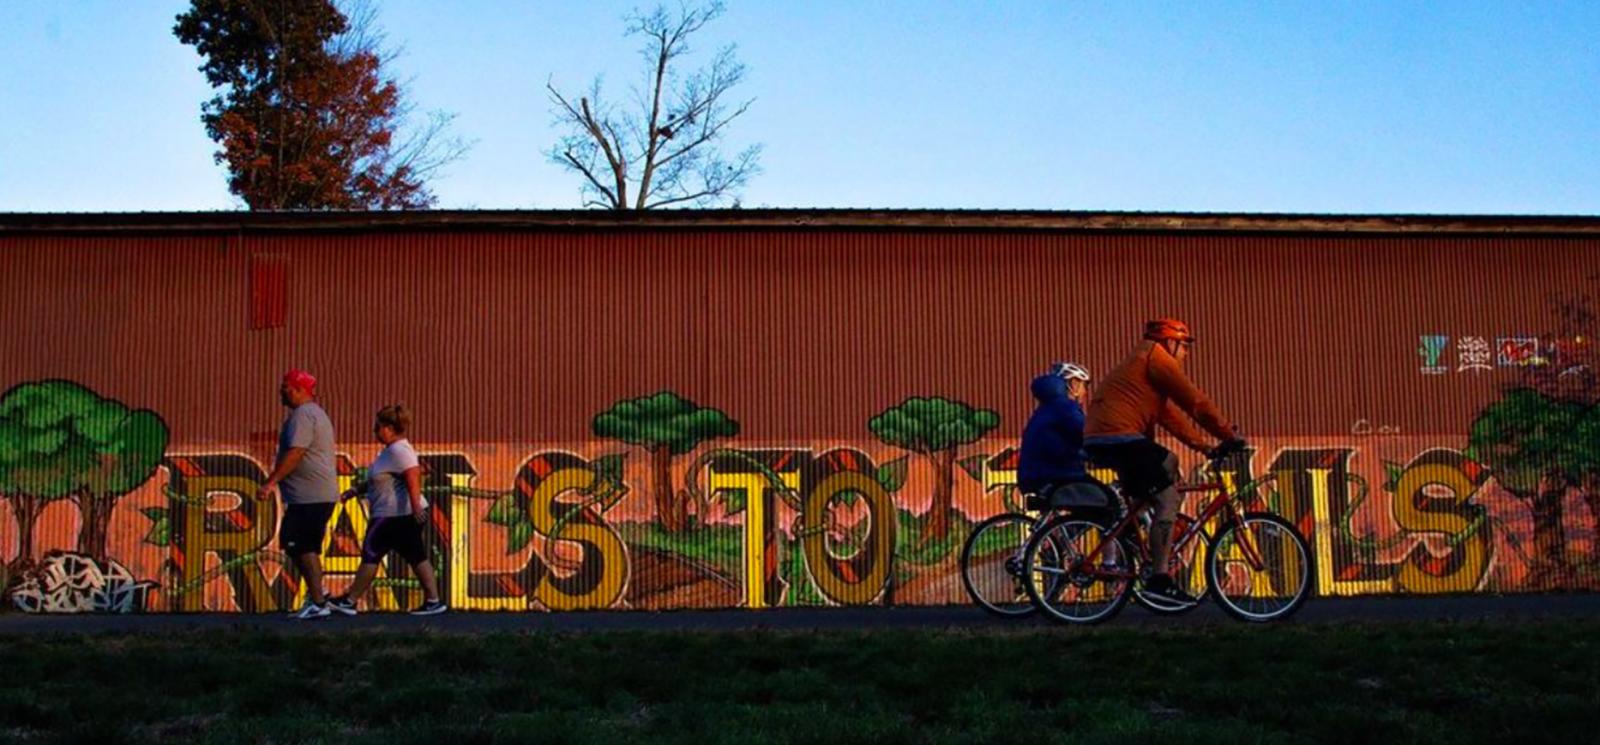 People walking and biking in front of mural (Instagram@aflaum)